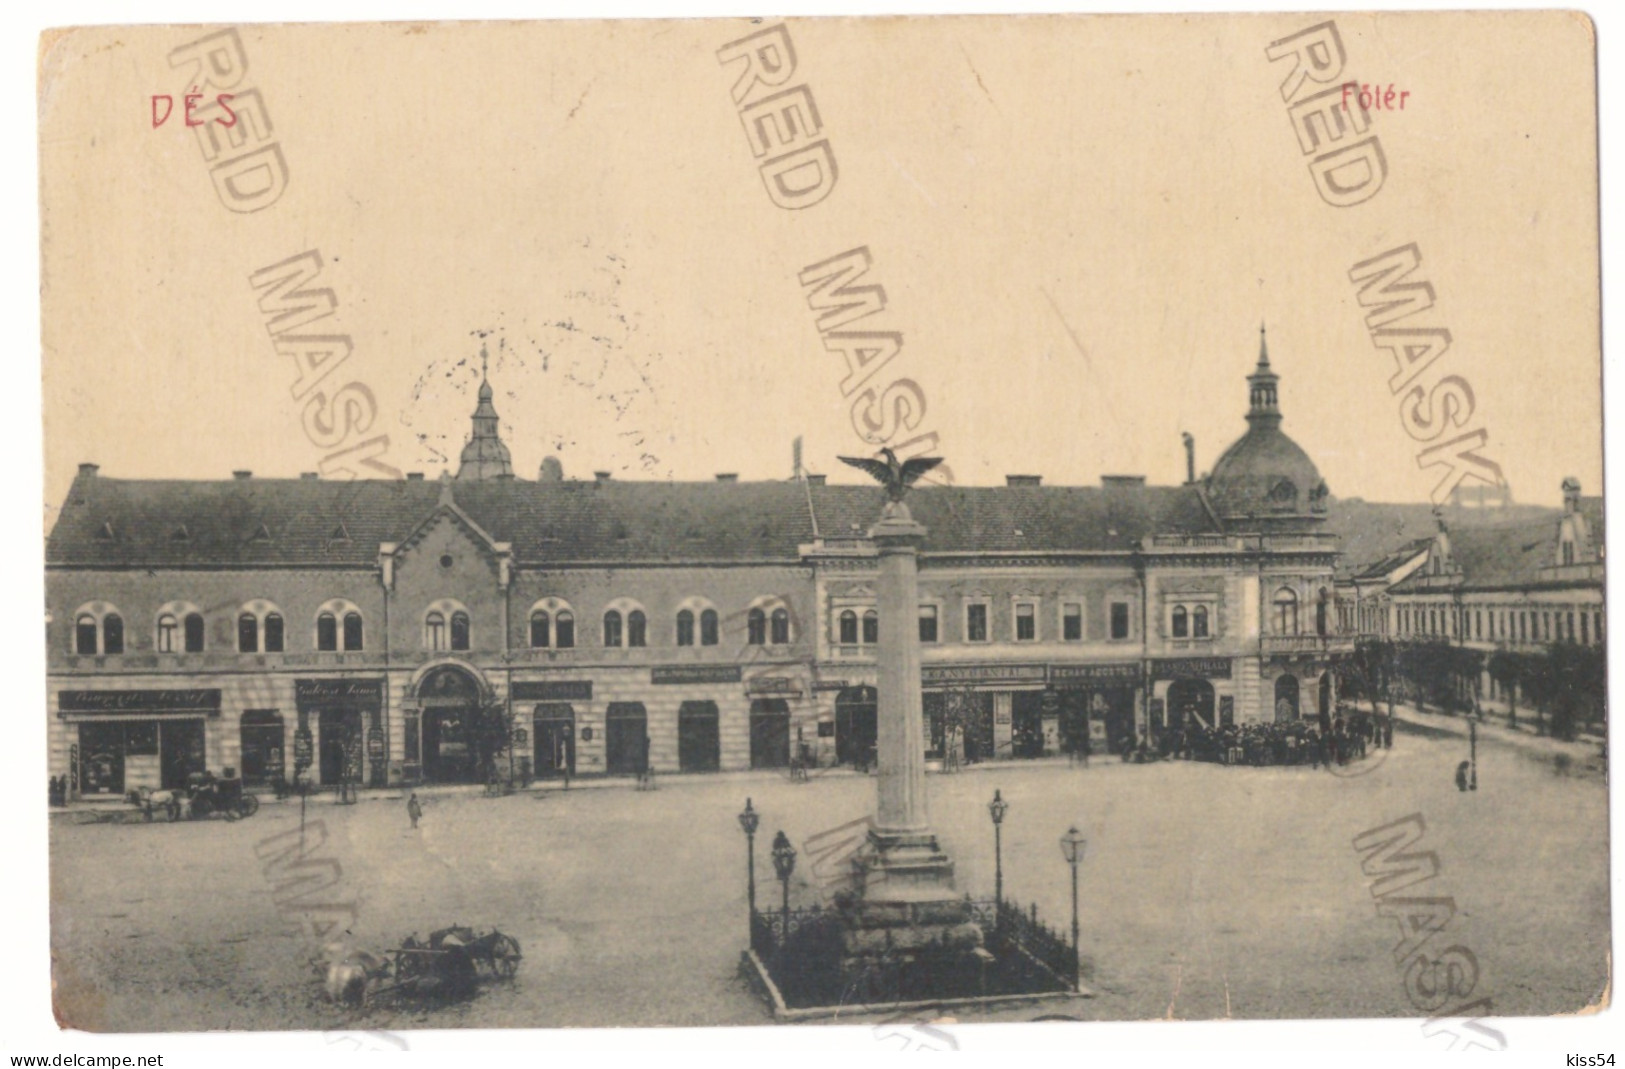 RO 999 - 22253 DEJ, Cluj, Market, Romania - Old Postcard - Used - 1908 - Roemenië